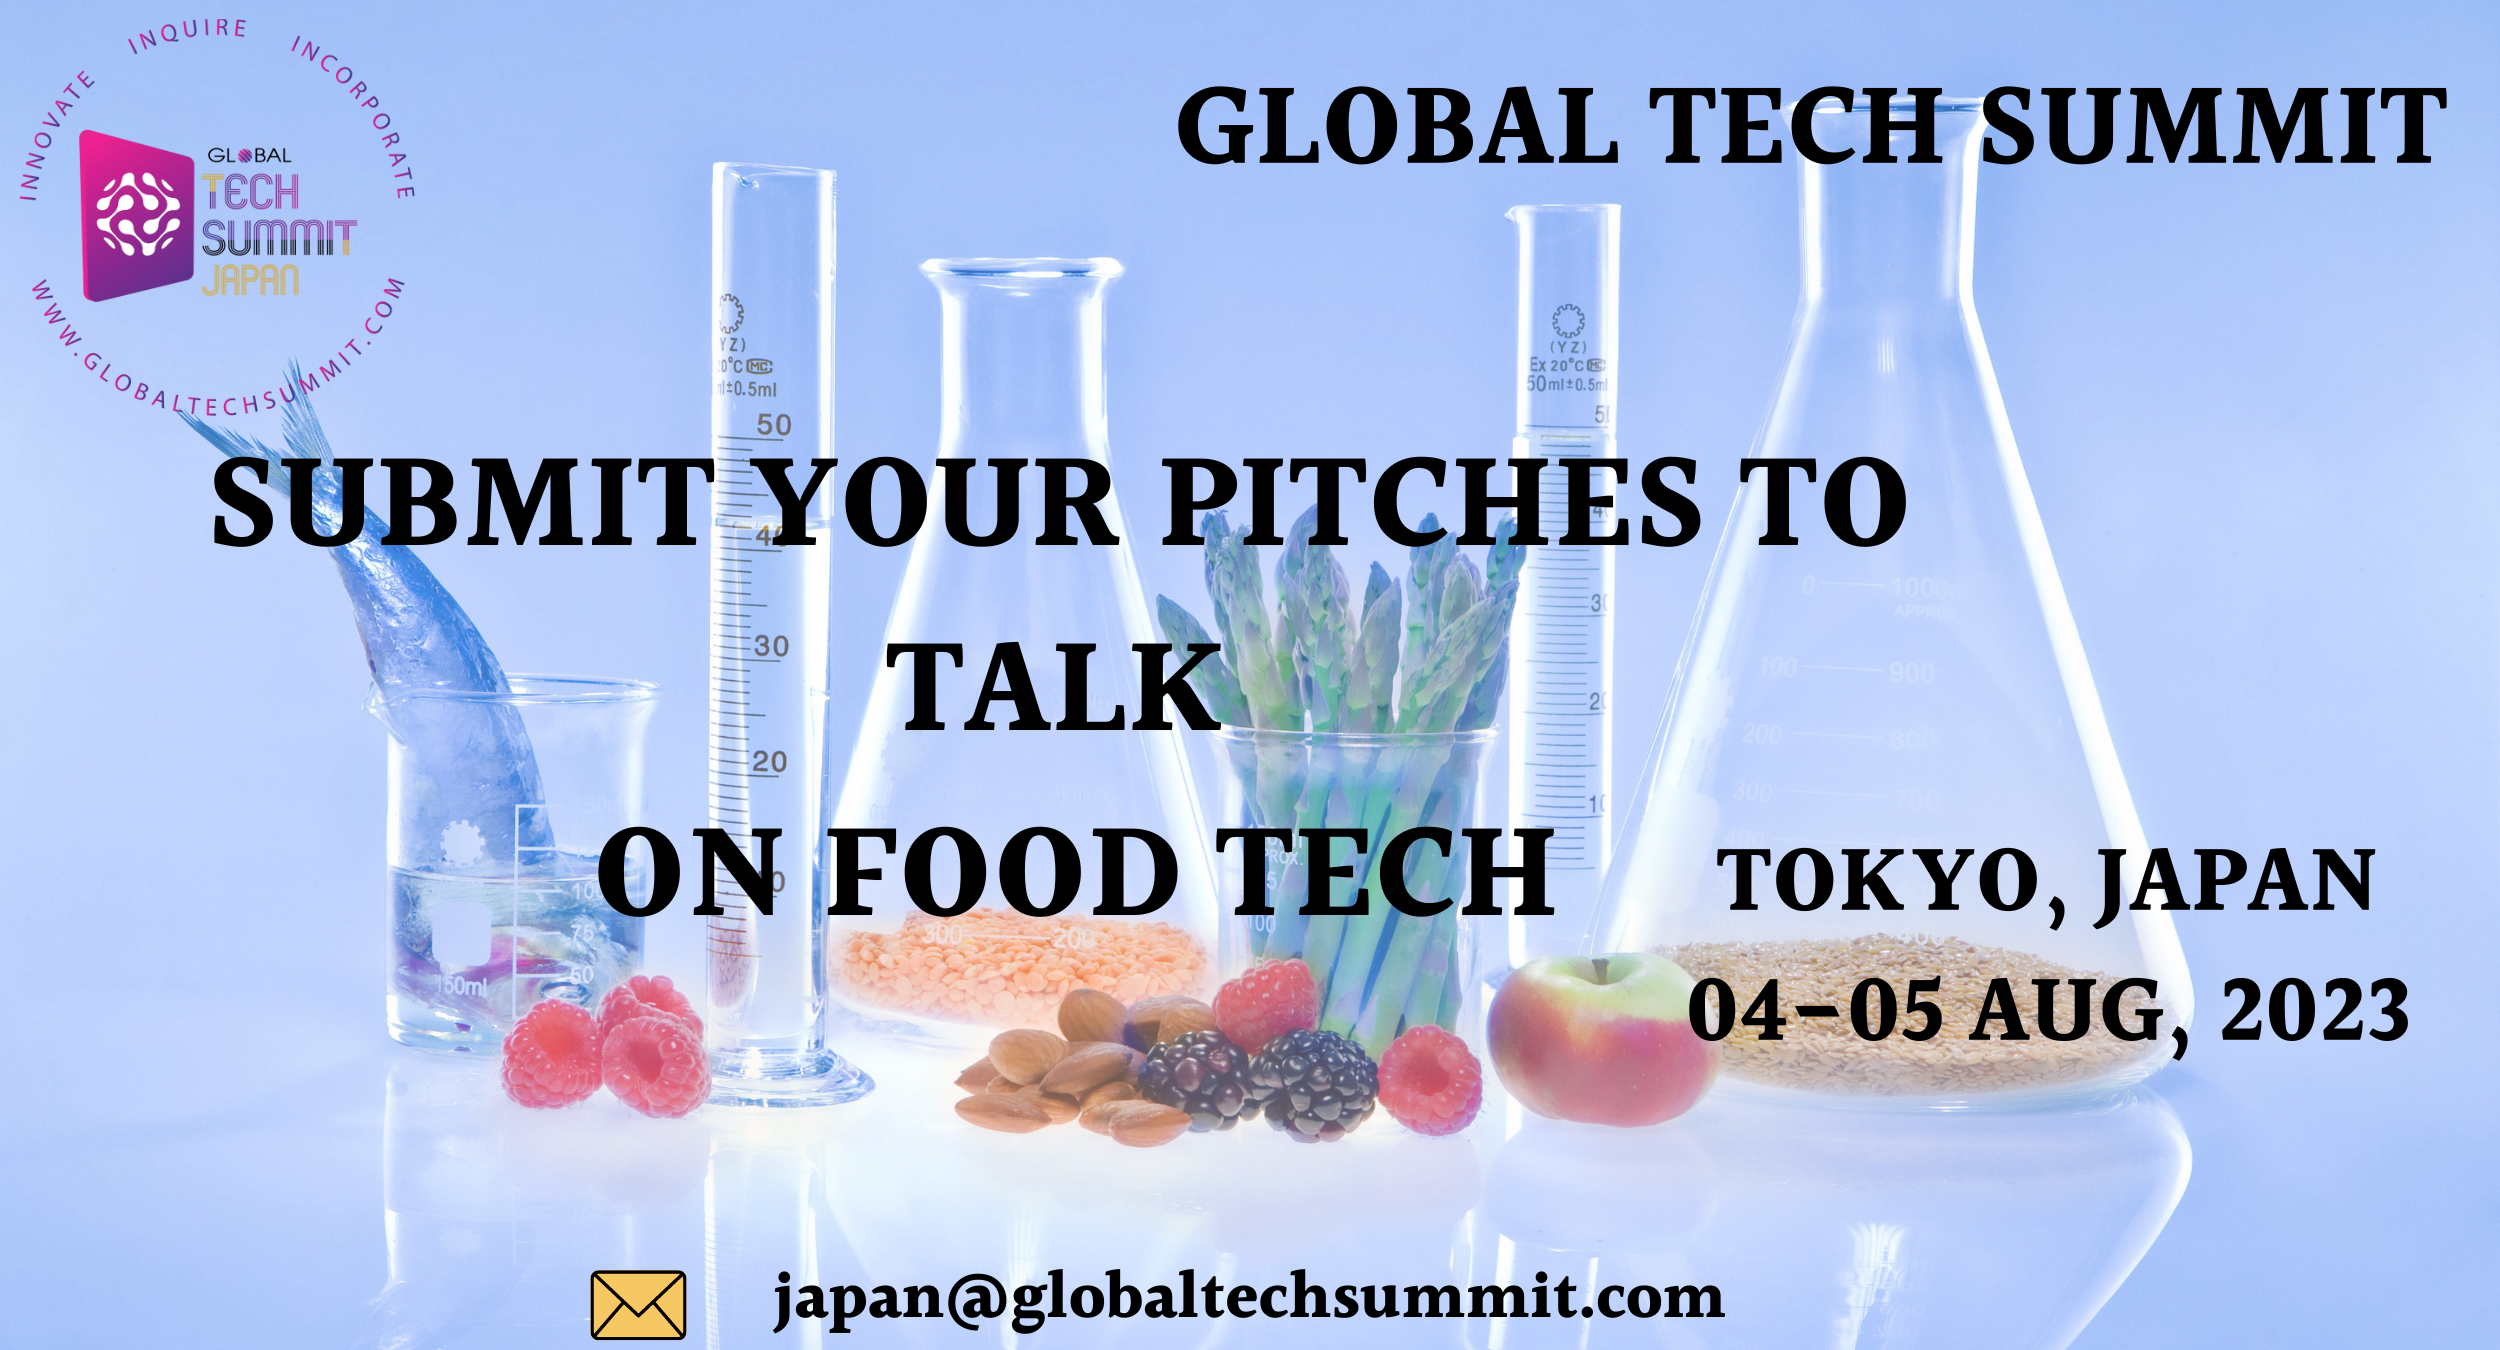 Global Tech Summit: Tokyo - 